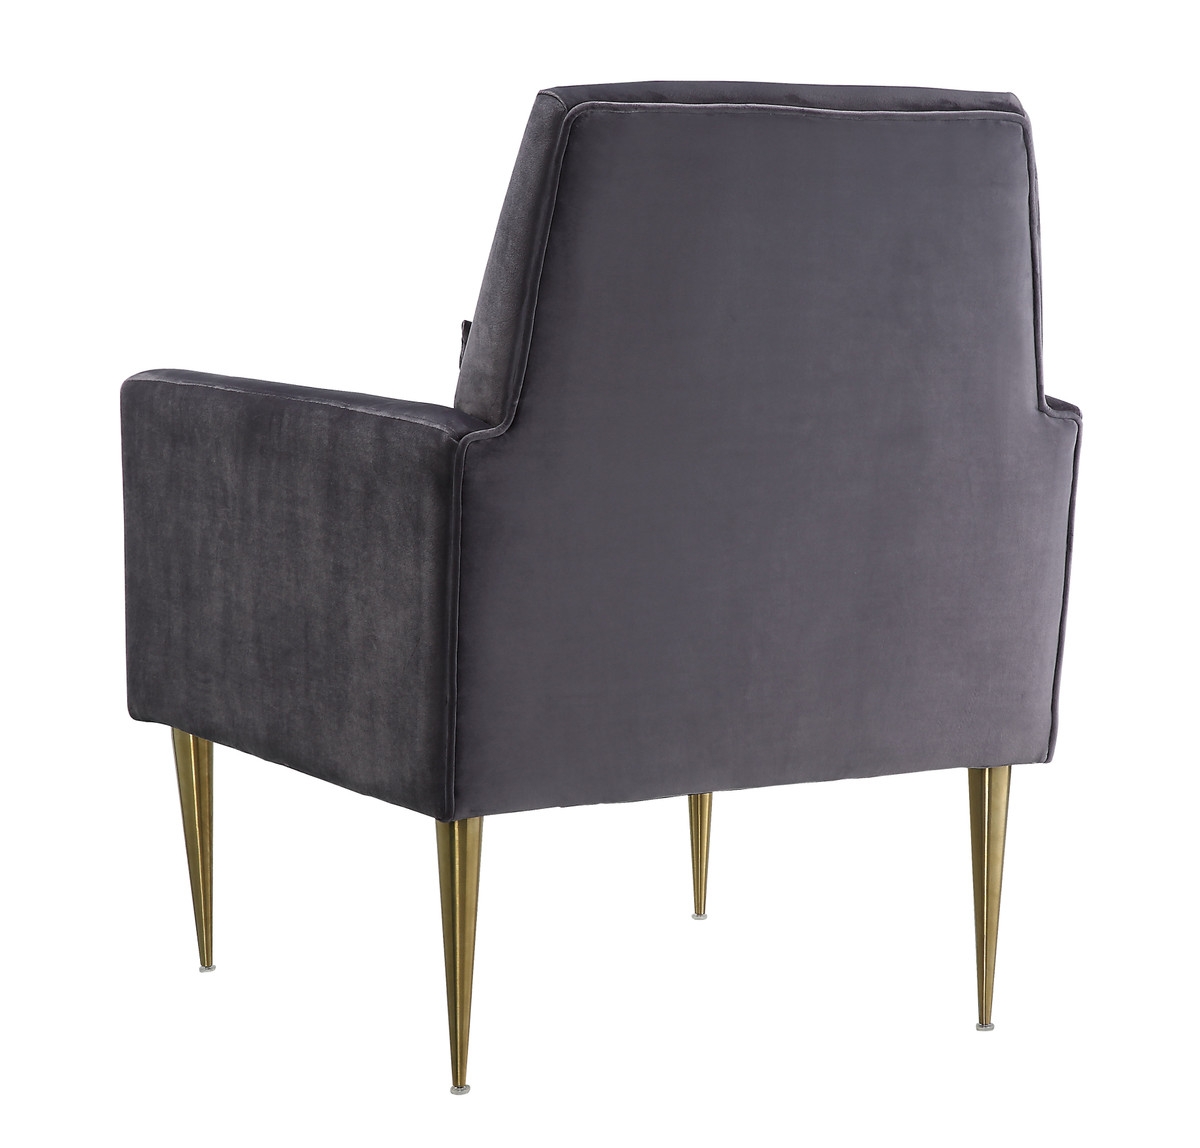 Desmond Morgan Velvet Chair - Image 1